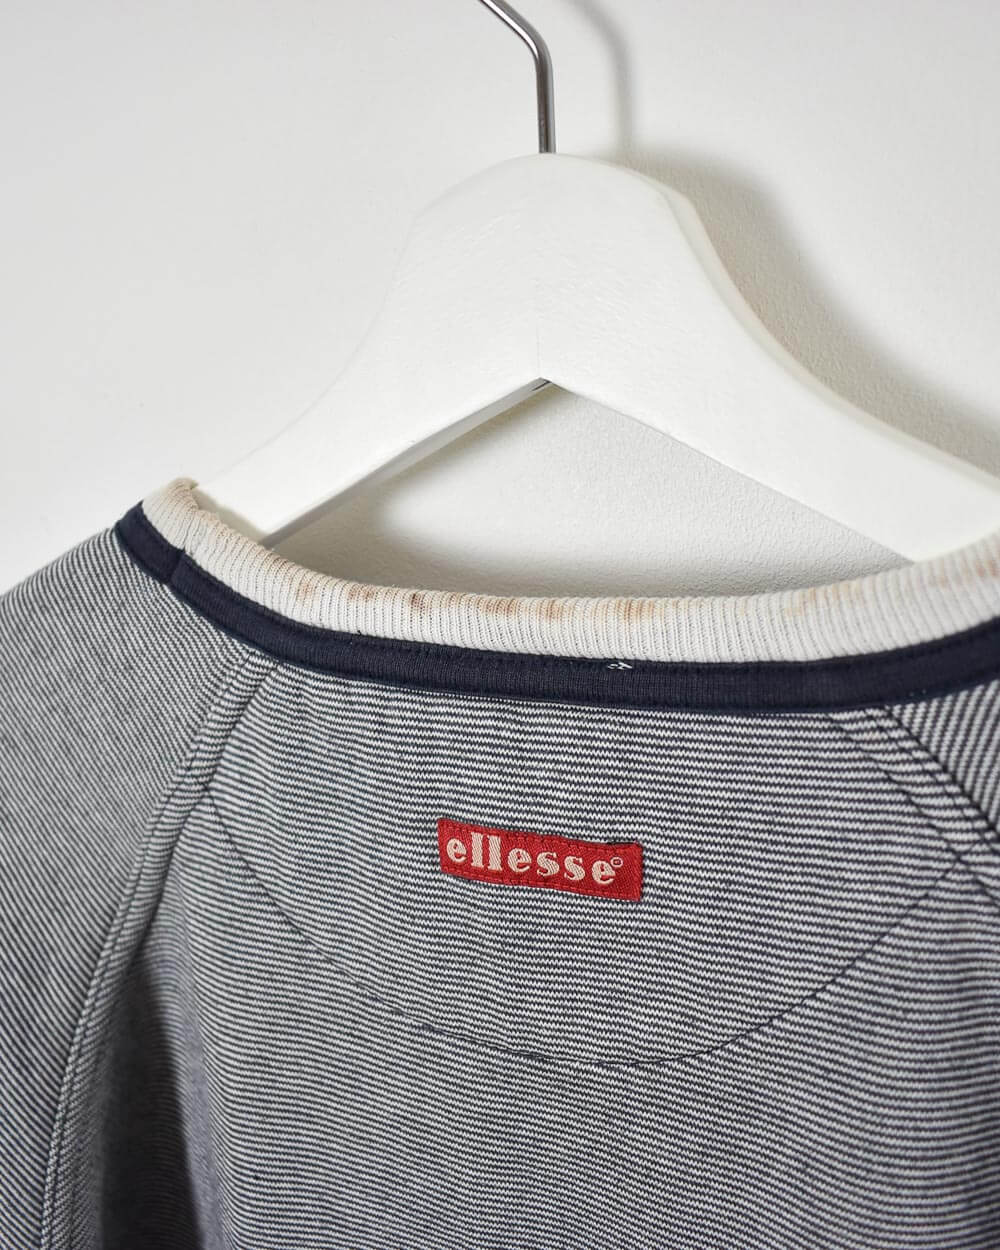 Ellesse Women's Sweatshirt - Medium - Domno Vintage 90s, 80s, 00s Retro and Vintage Clothing 